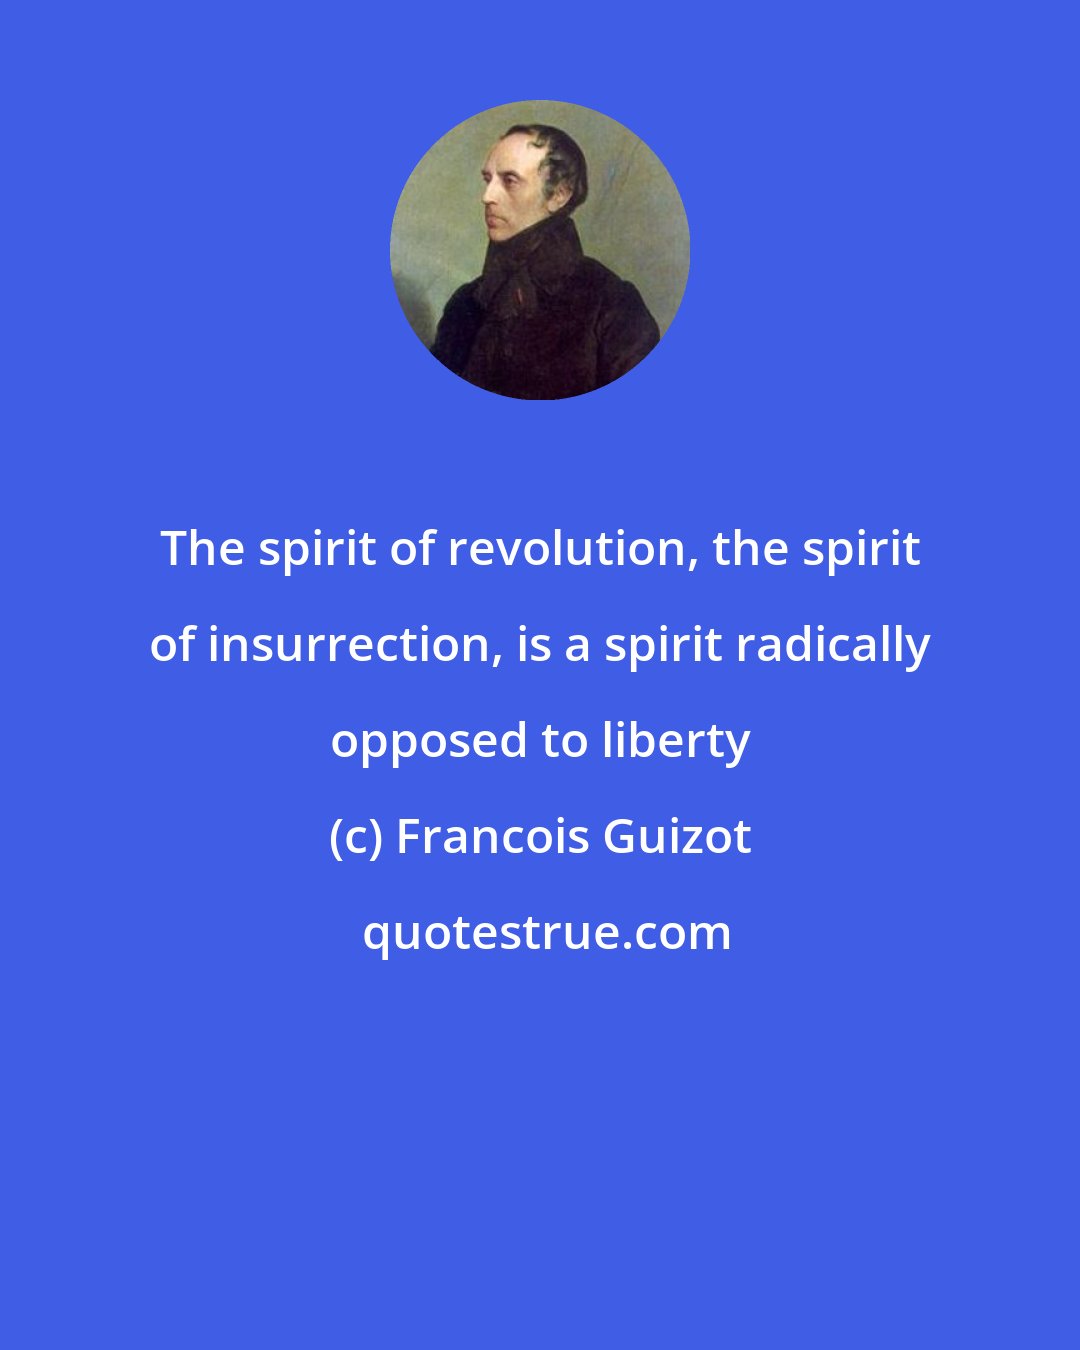 Francois Guizot: The spirit of revolution, the spirit of insurrection, is a spirit radically opposed to liberty